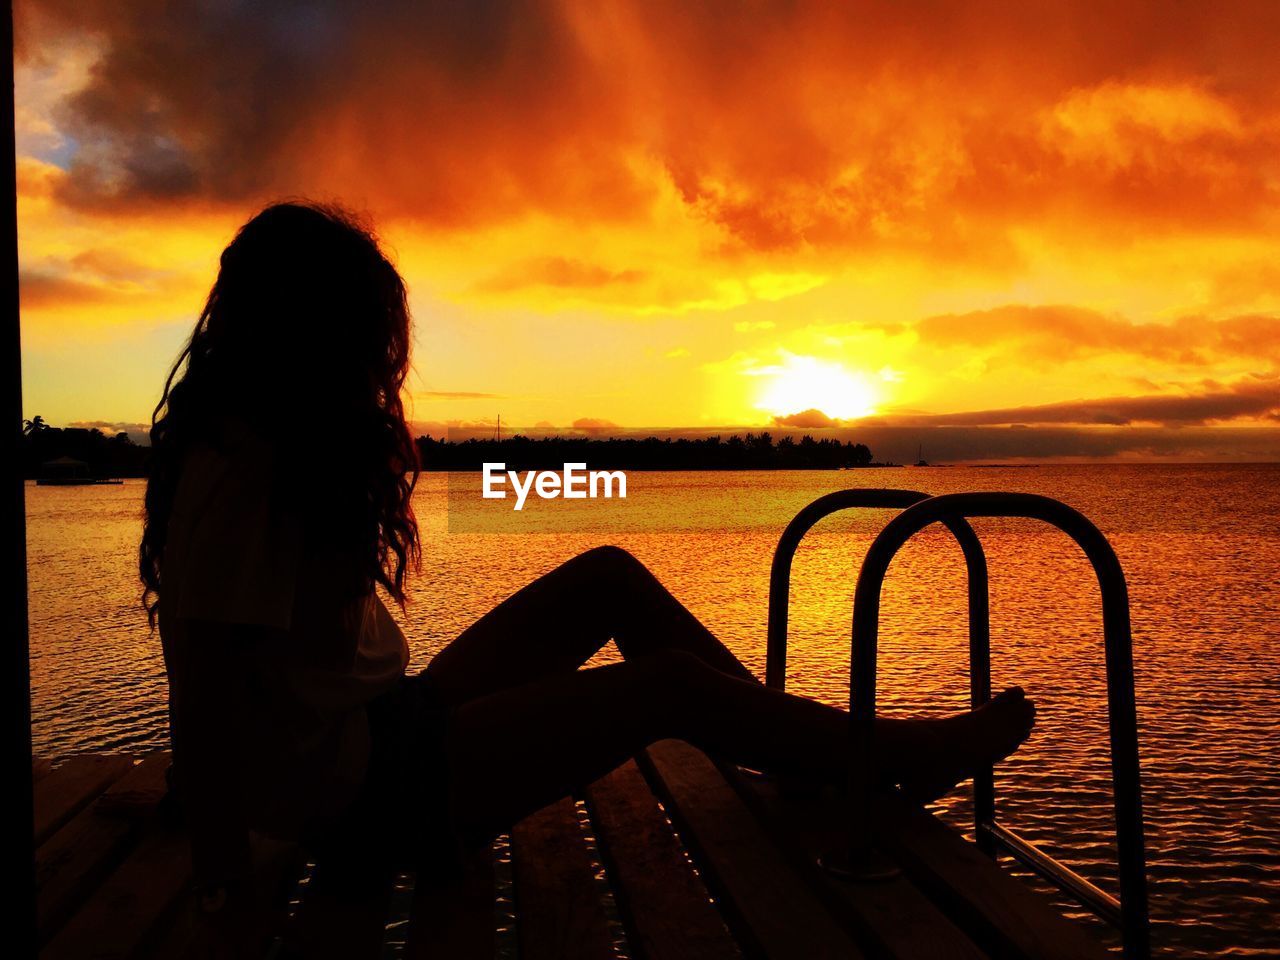 Silhouette woman sitting on pier over sea against orange sky